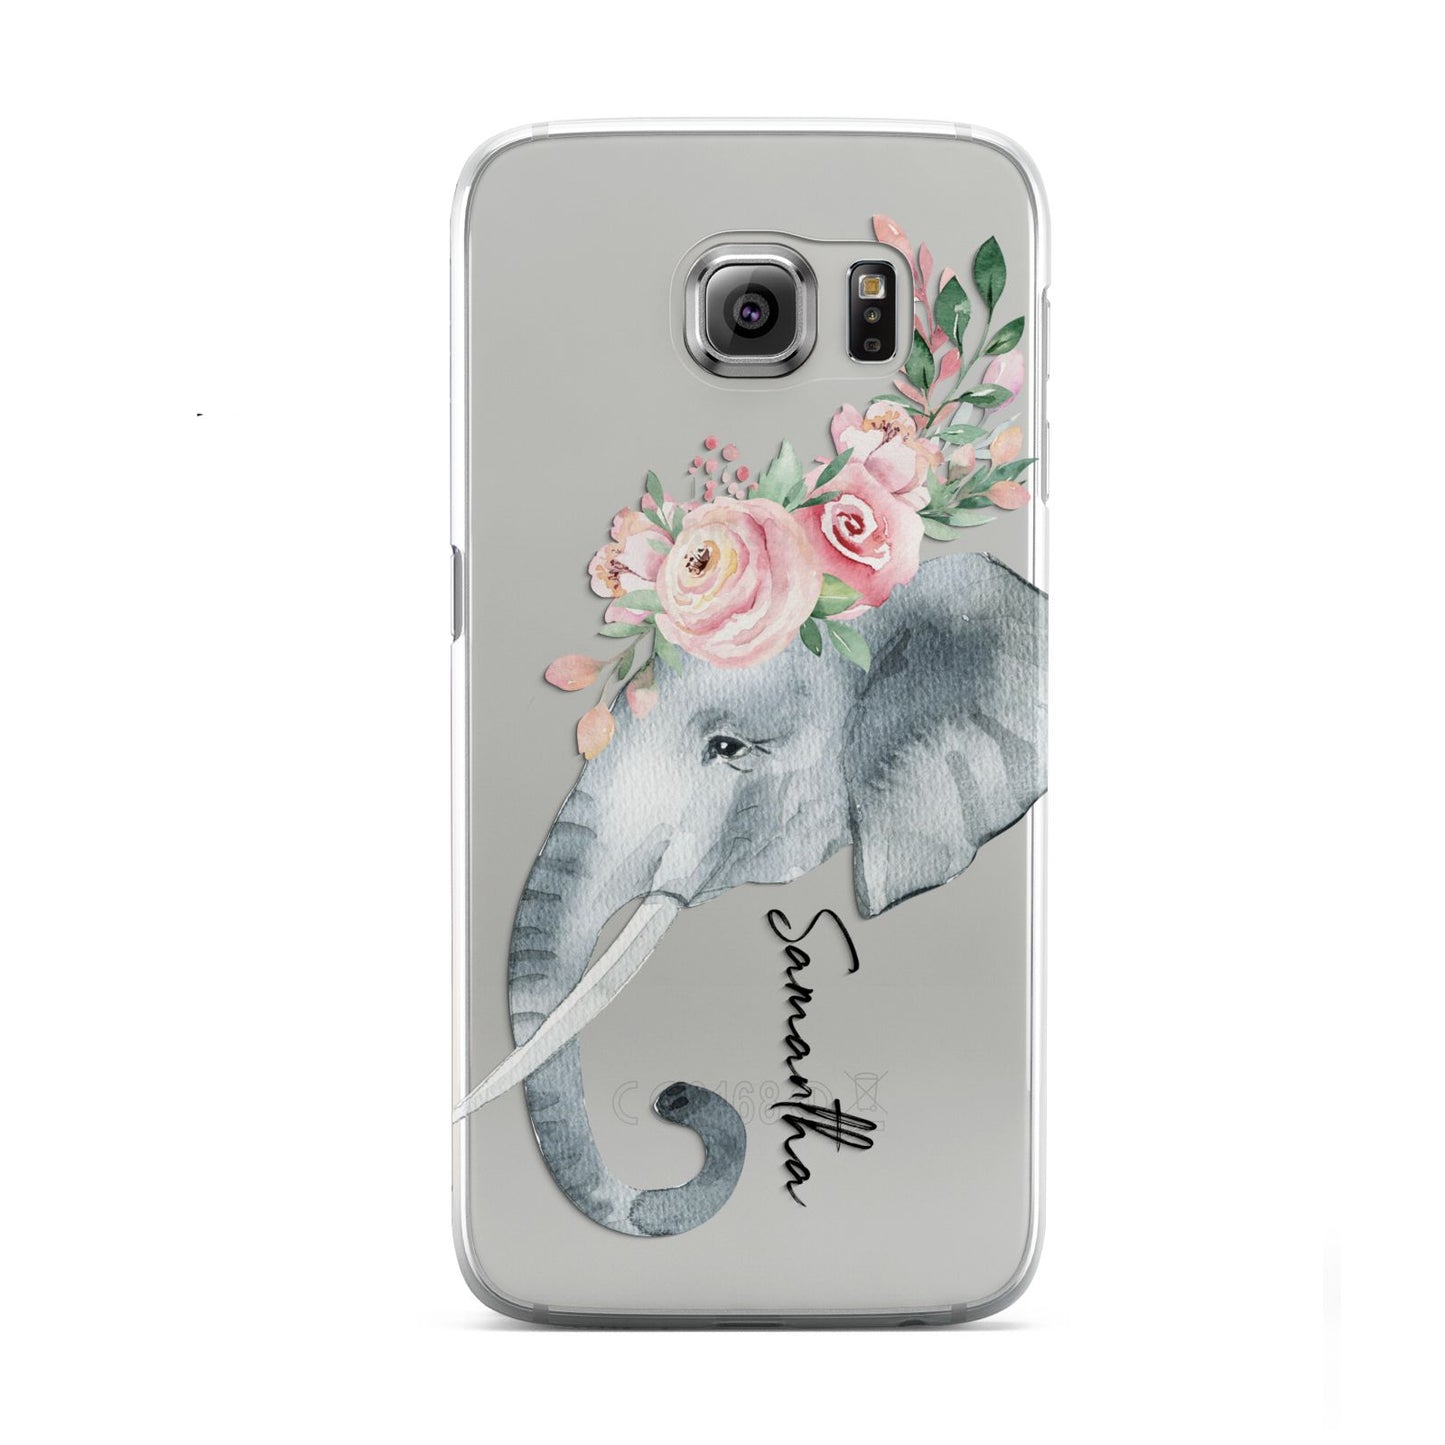 Personalised Elephant Samsung Galaxy S6 Case